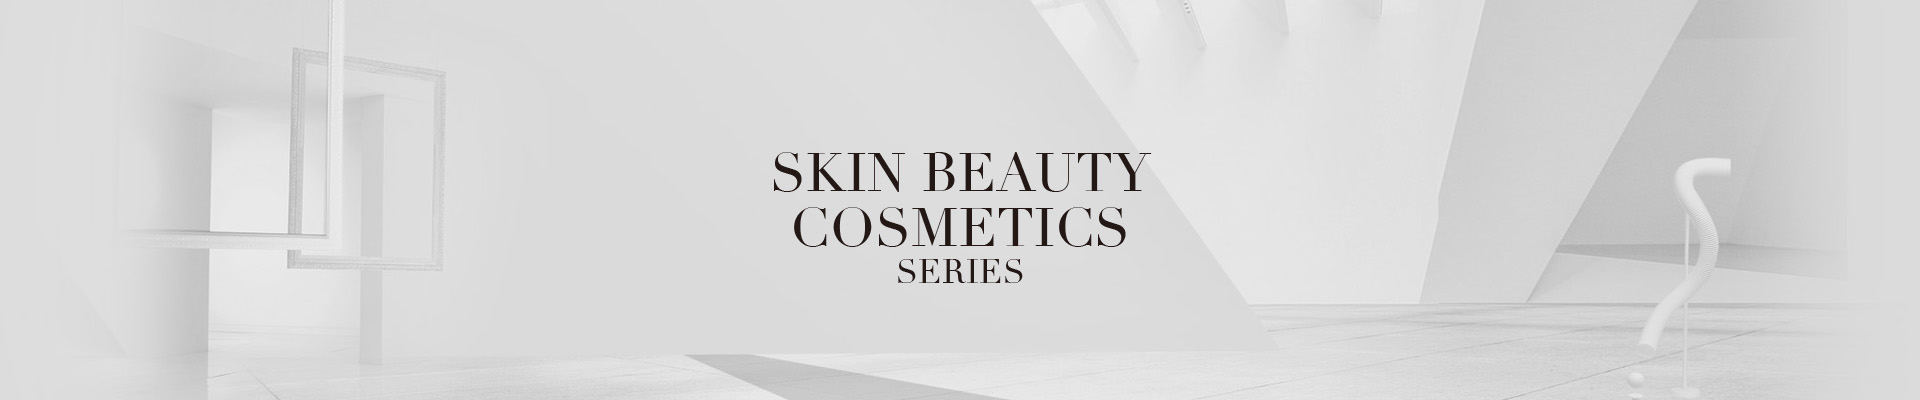 Skin Beauty Cosmetics Series